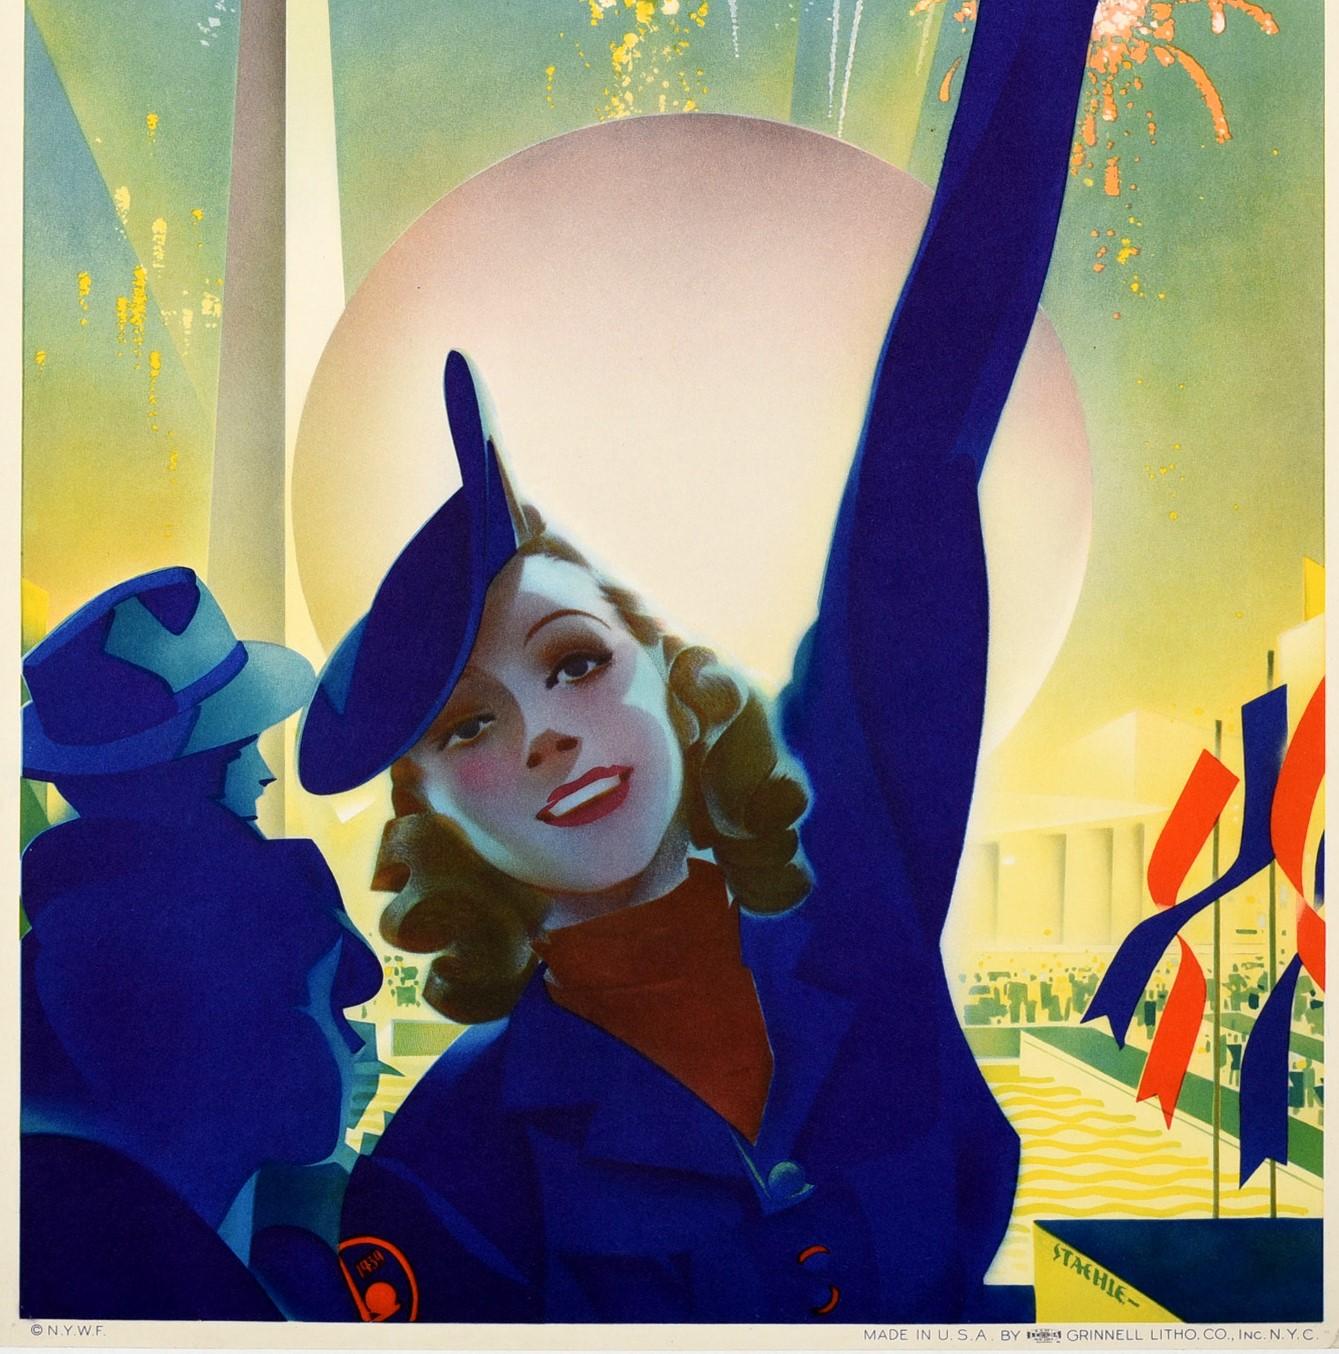 1939 world's fair poster